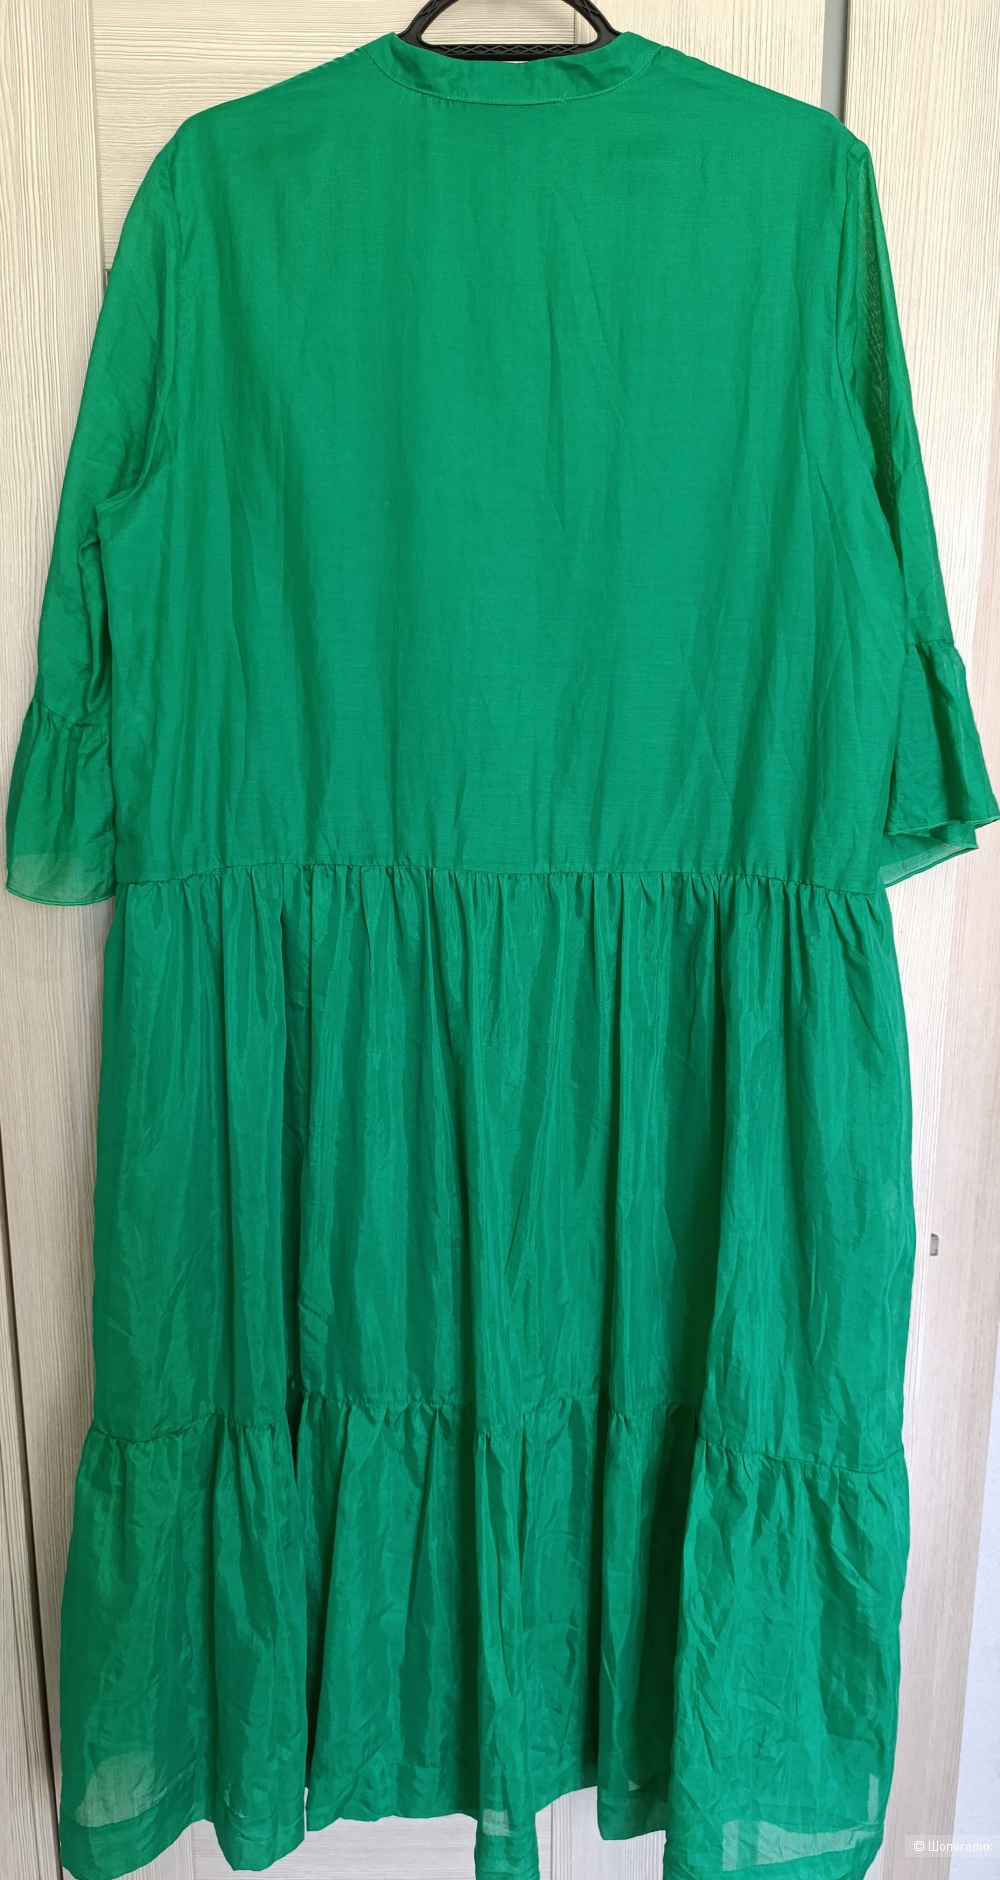 Платье Pierro Moretti.,размер 50